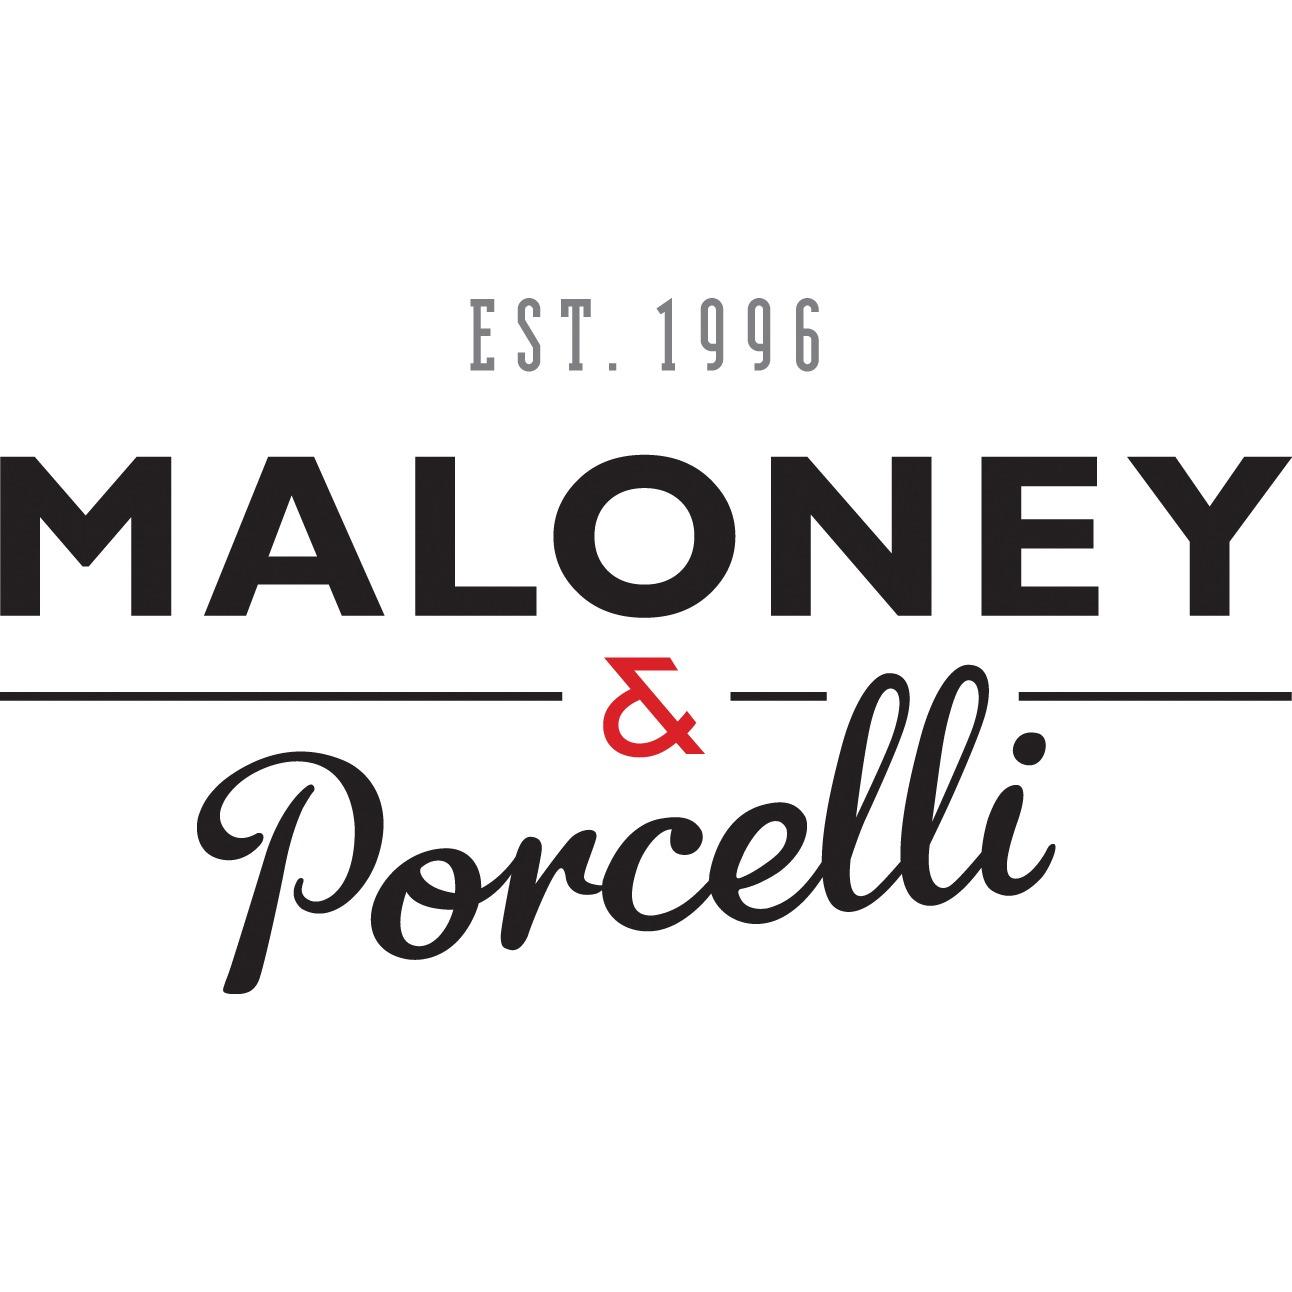 Maloney & Porcelli Photo